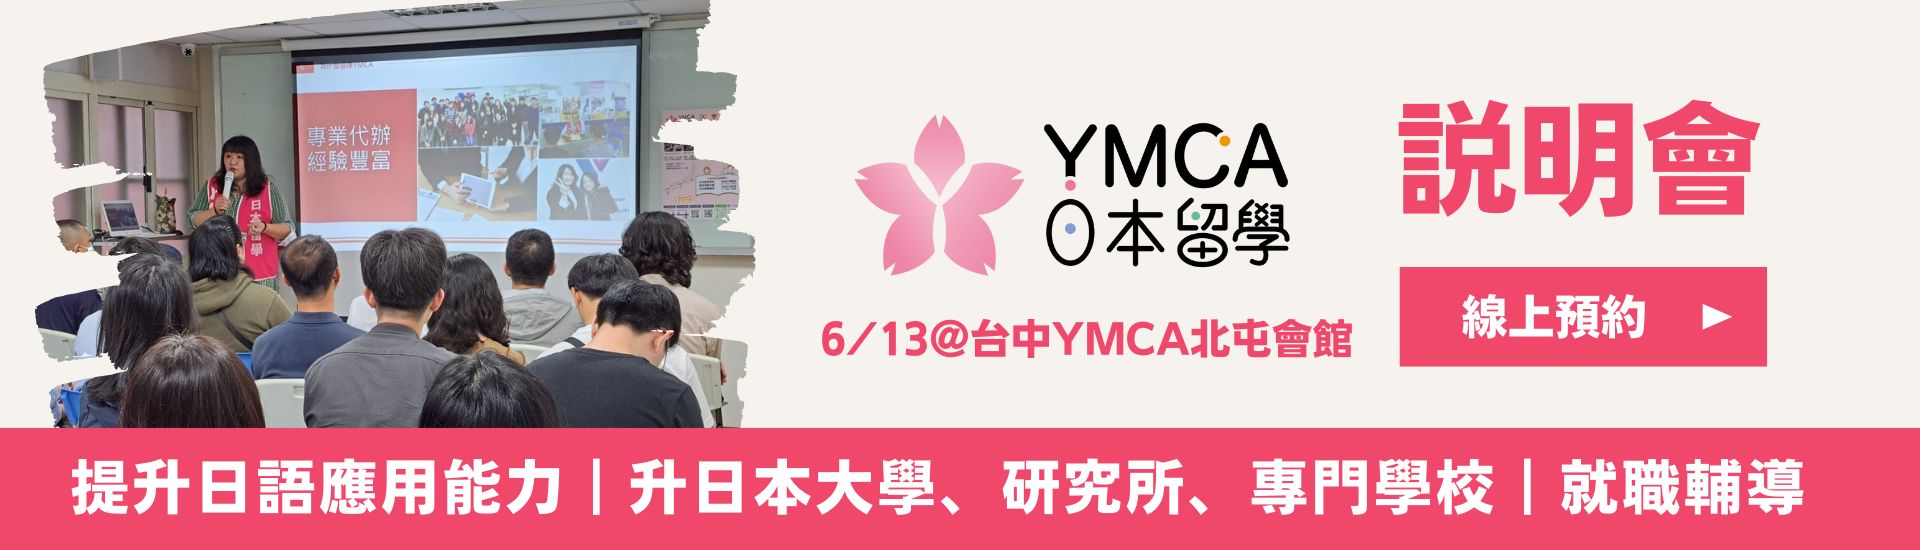 YMCA日本留學說明會 日本打工 日本遊學 日本大學研究所 日本語言學校 日本留學代辦推薦